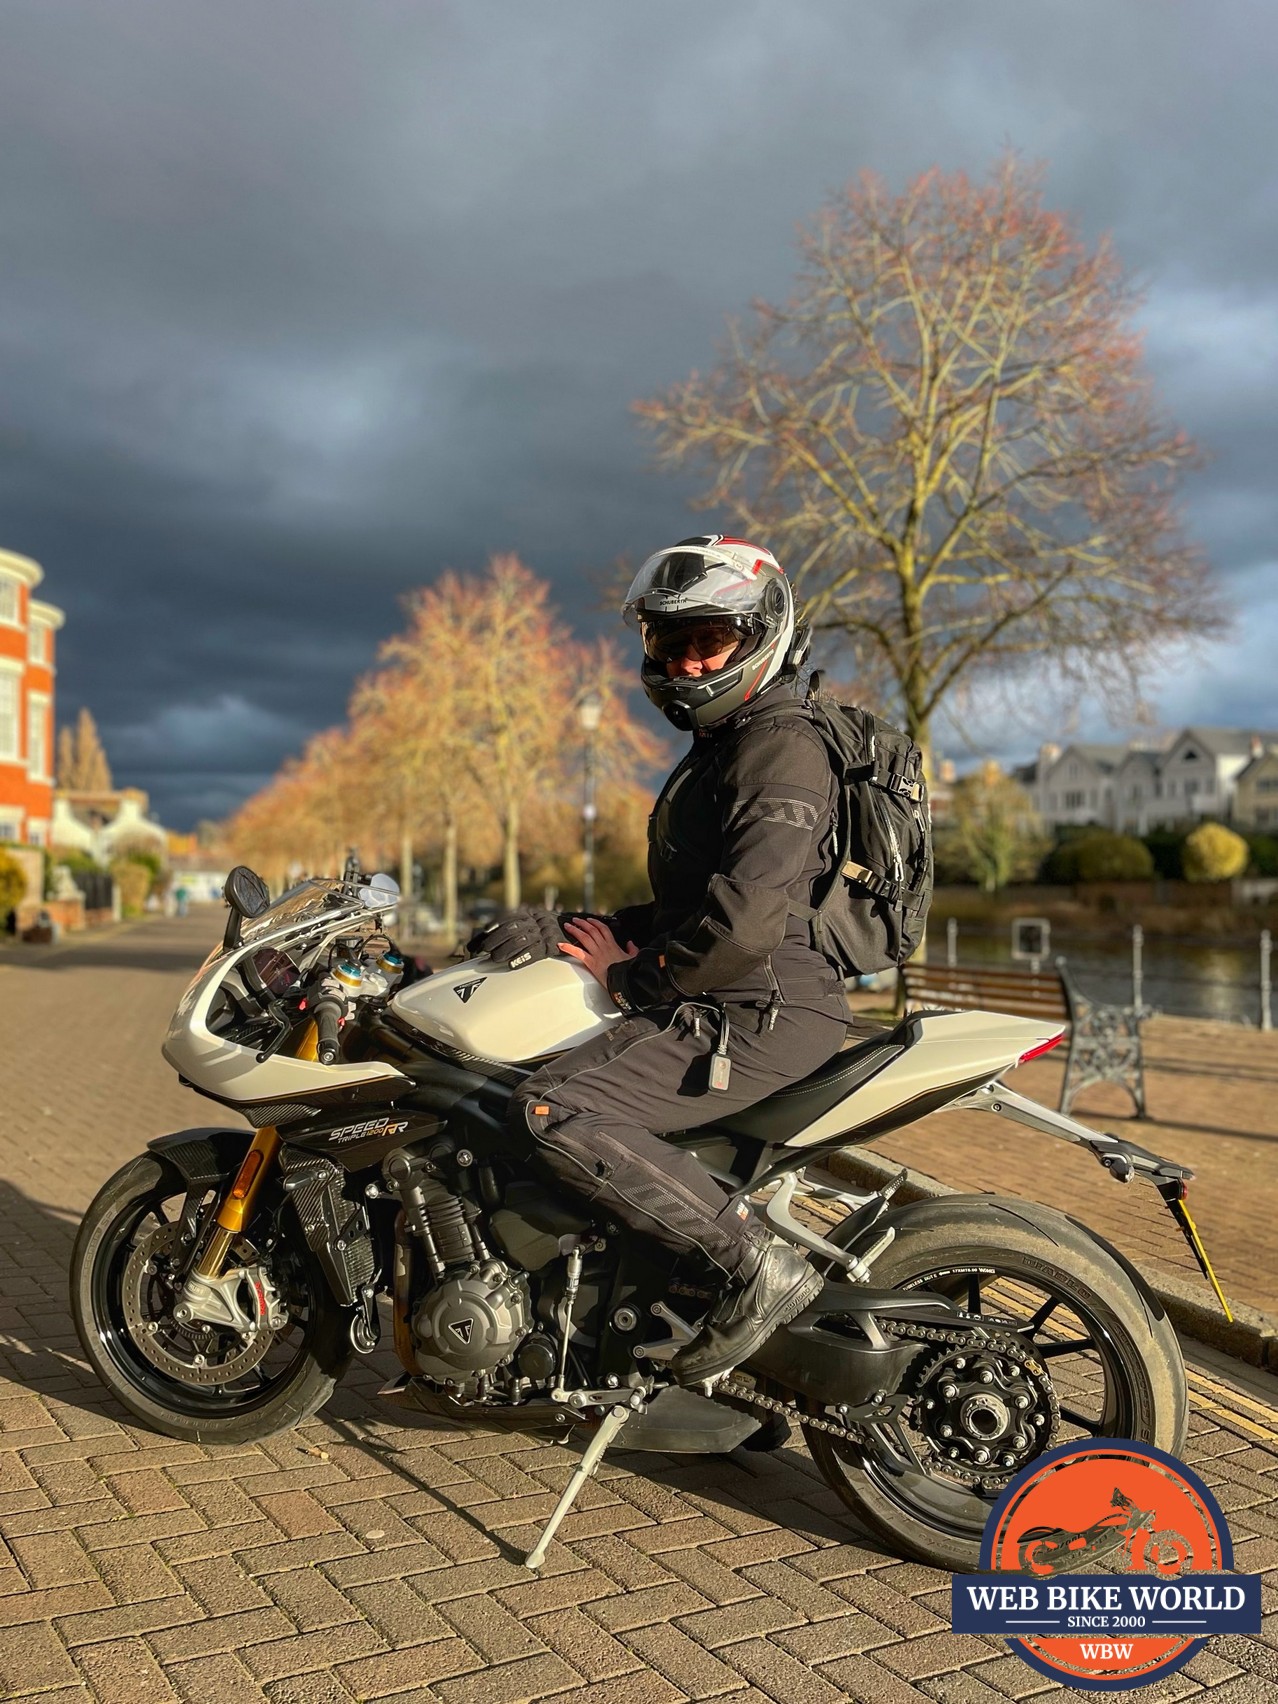 Rider with helmet on